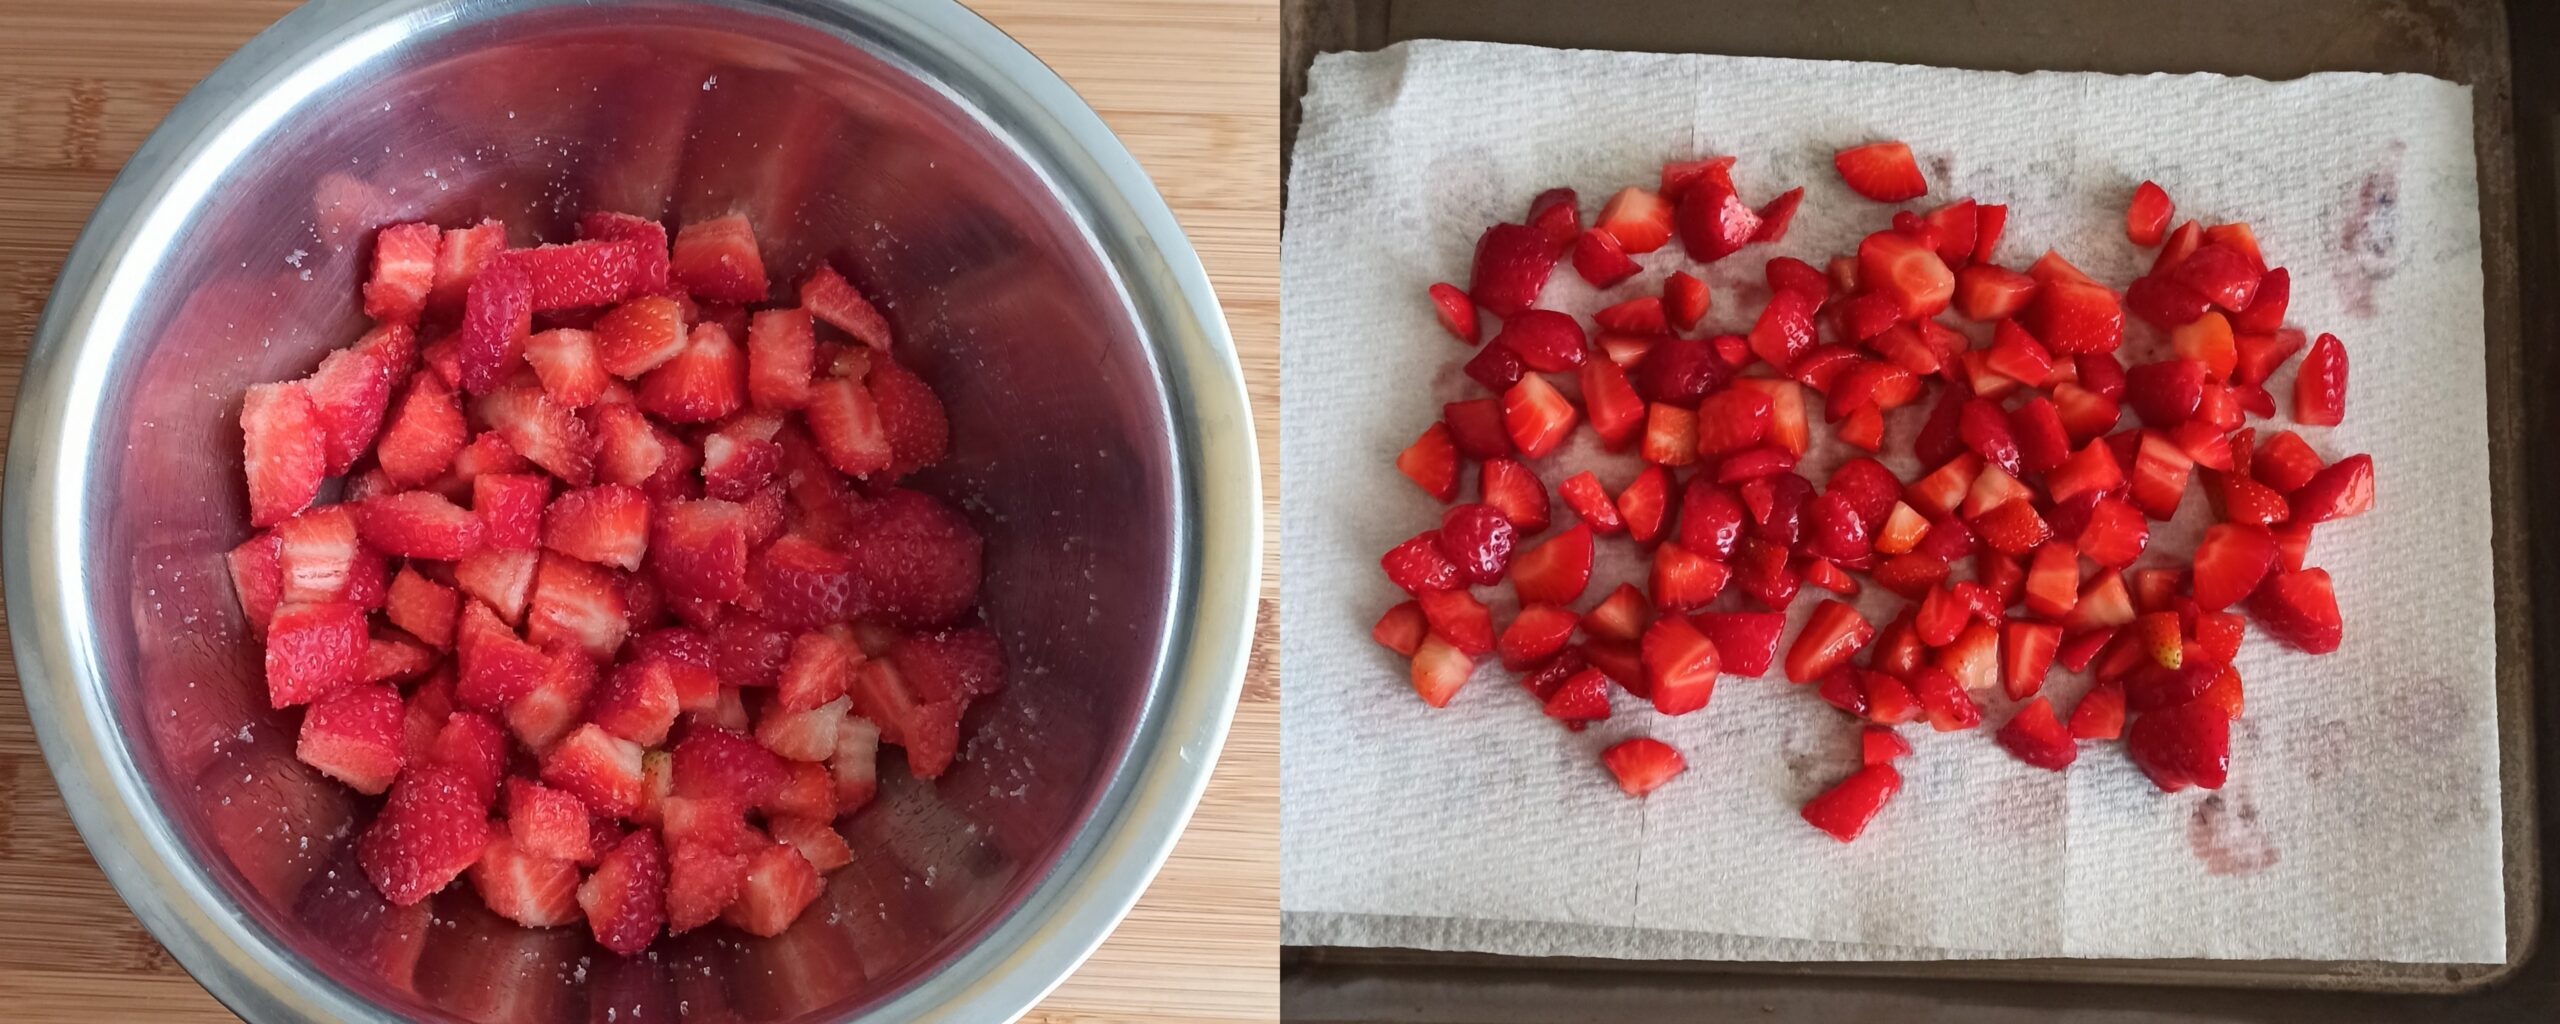 Strudel de fraises sans gluten - La Cassata Celiaca